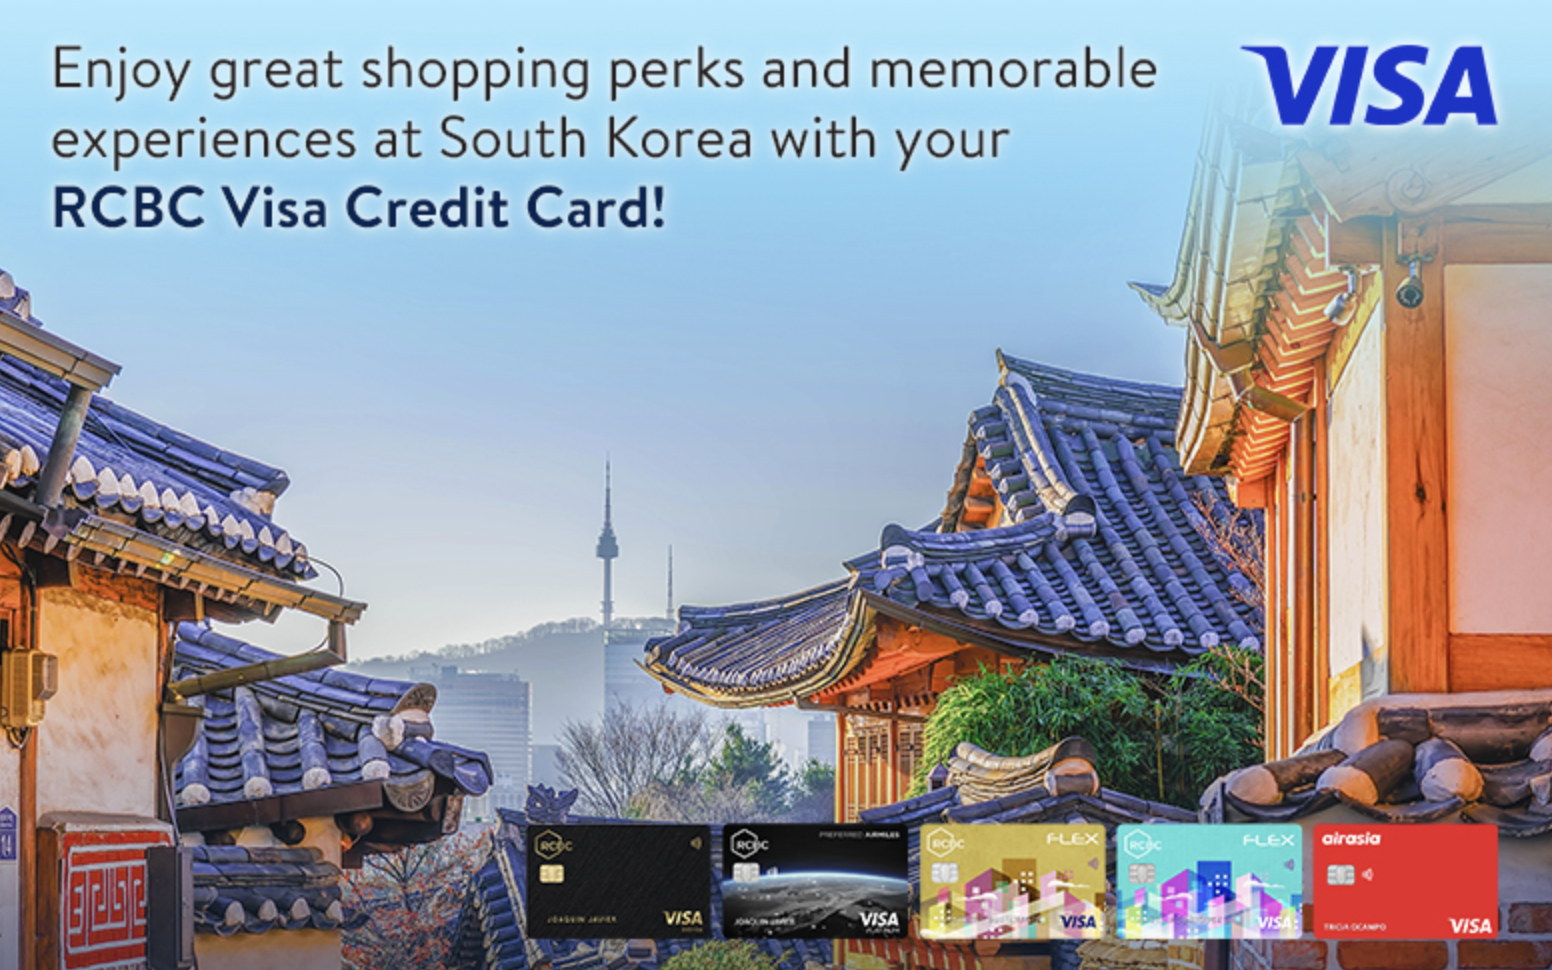 rcbc credit card promos - South Korea Travel Discounts with Visa